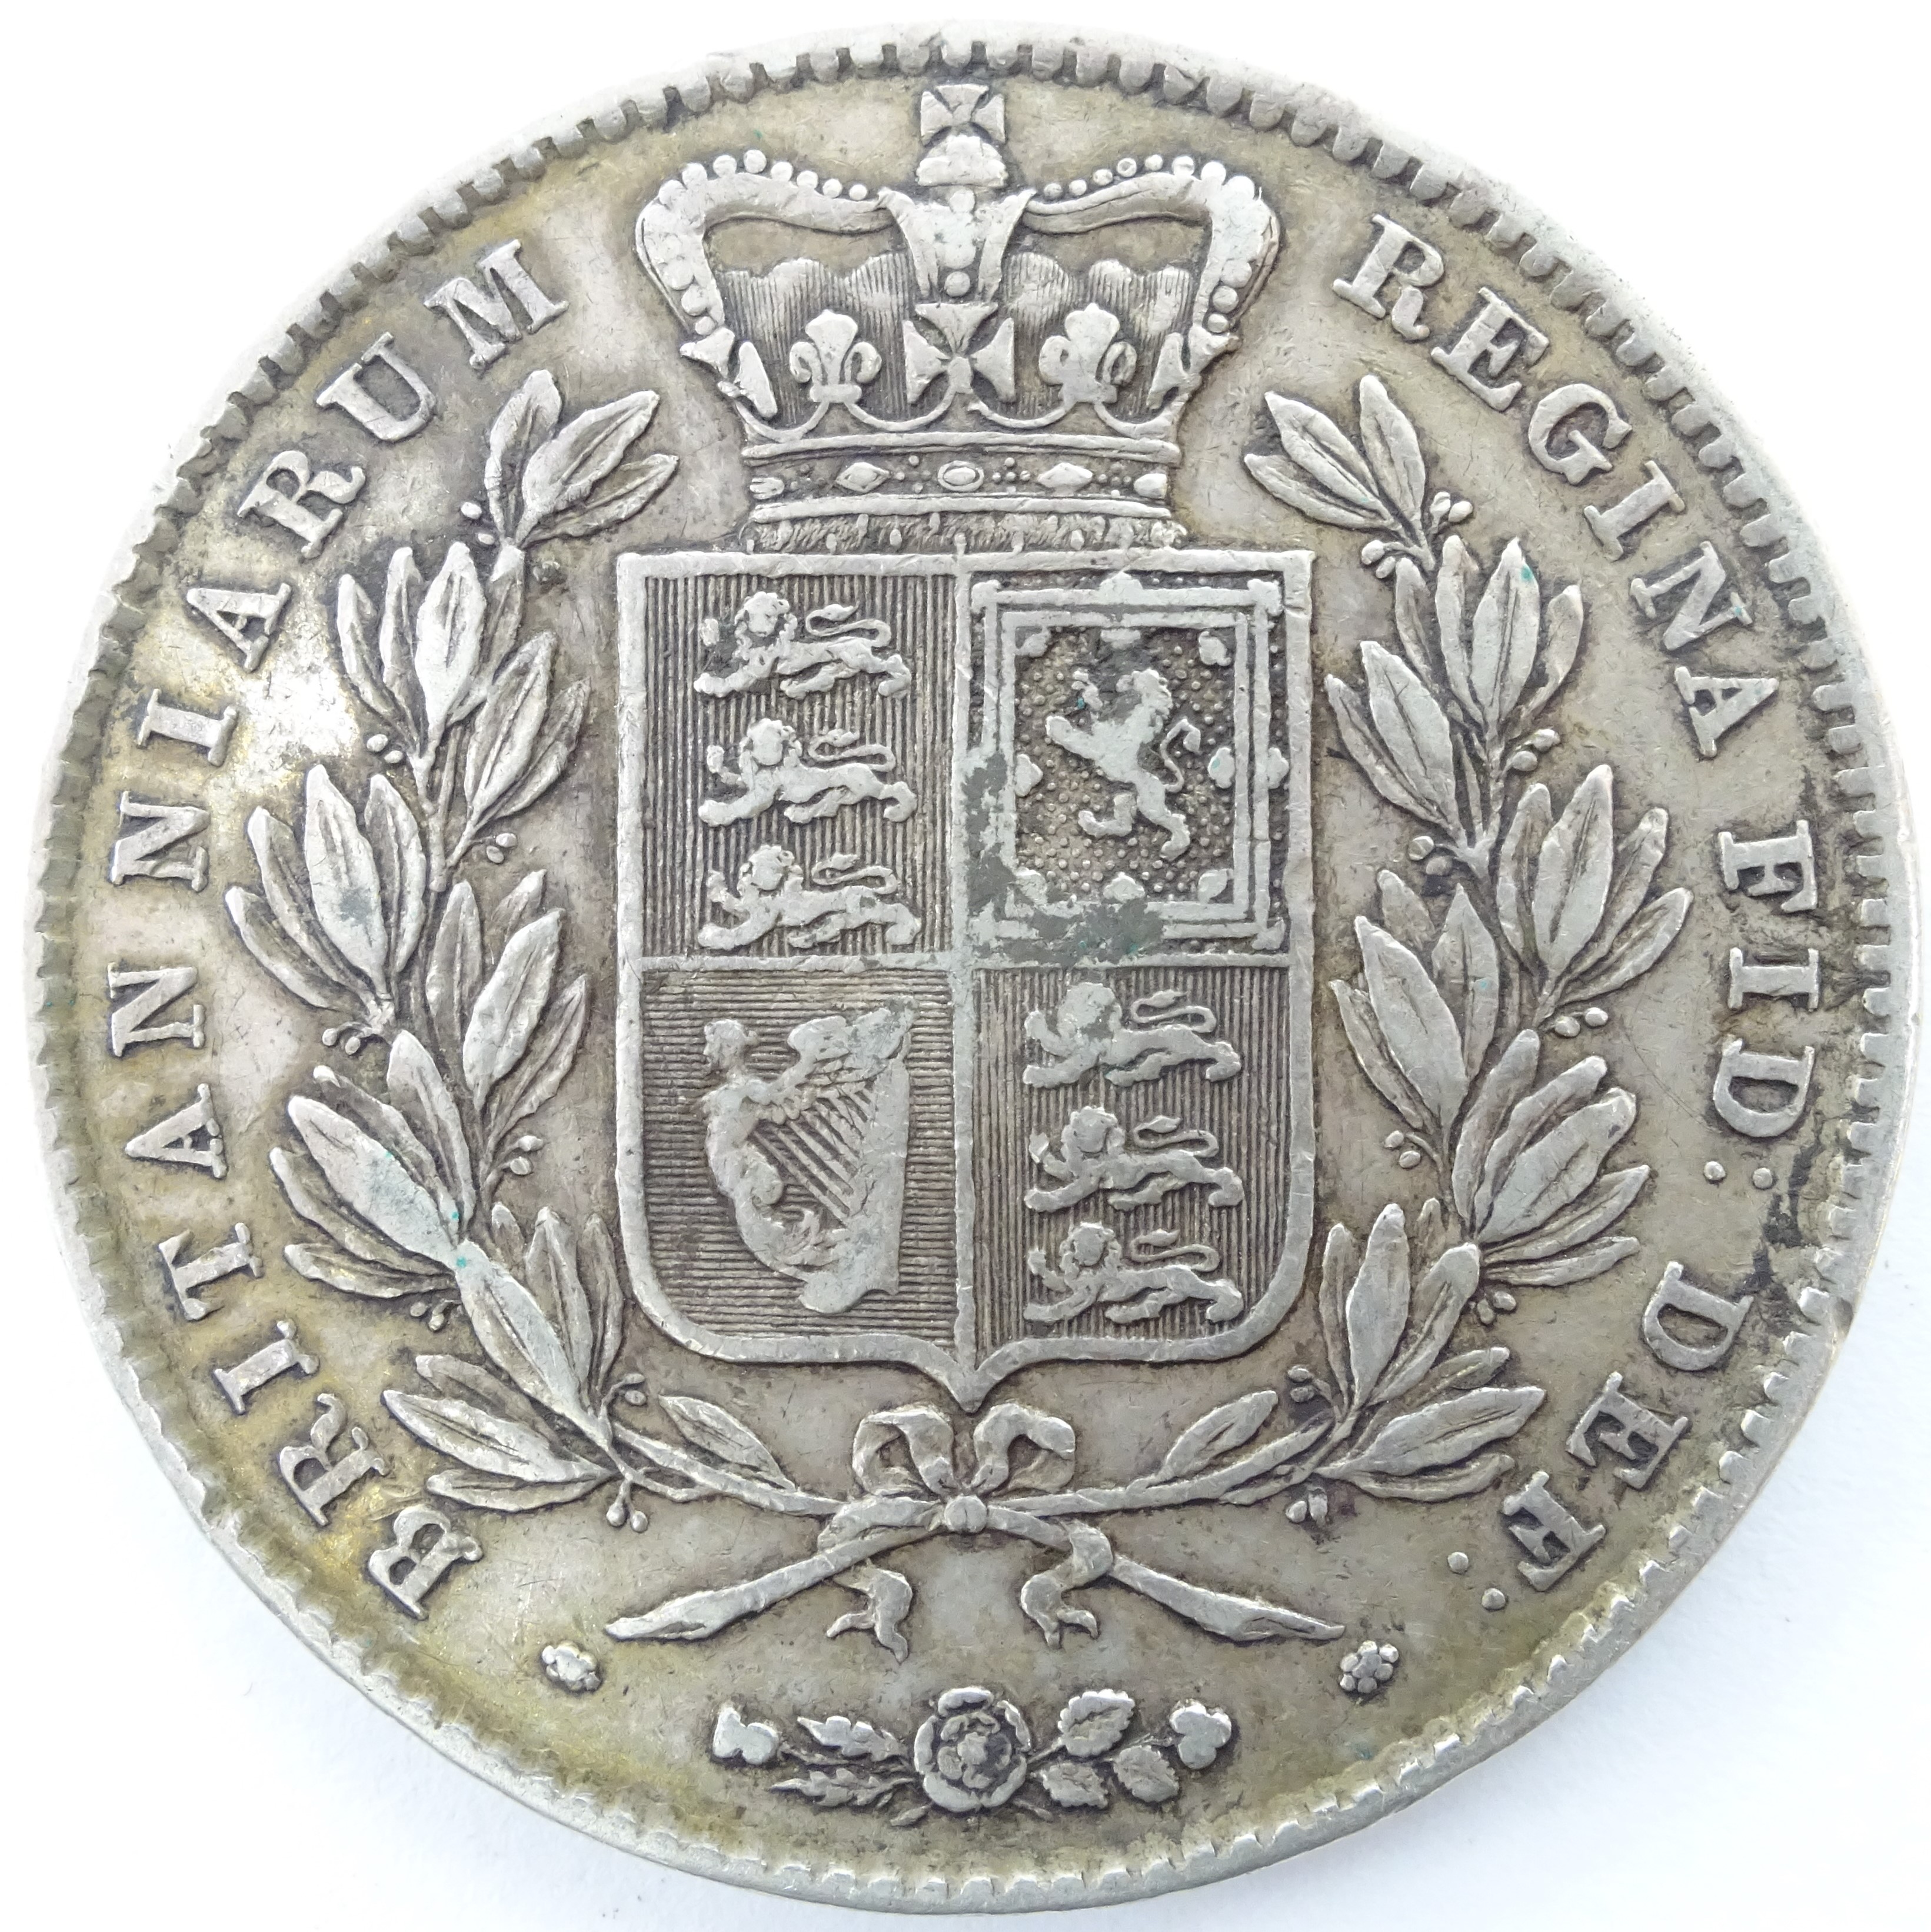 Great British Queen Victoria 1844 crown, - Image 2 of 2